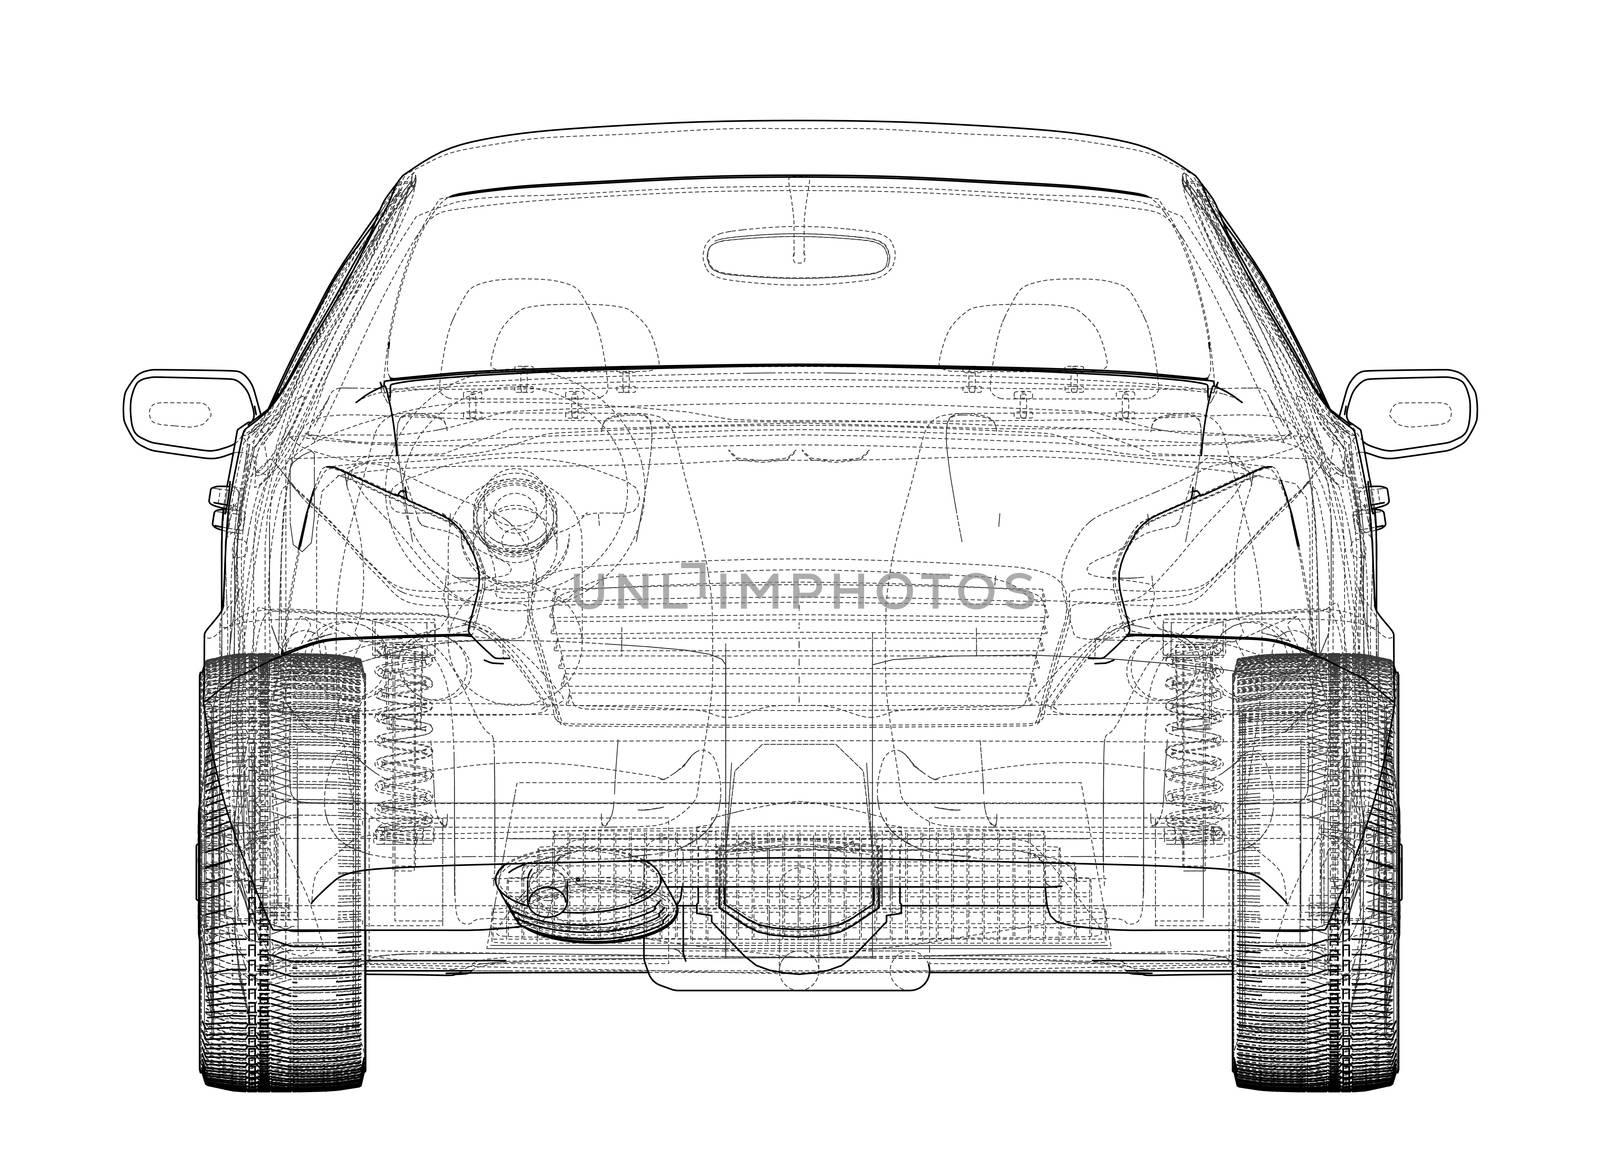 Concept car sketch. 3d illustration. Wire-frame style